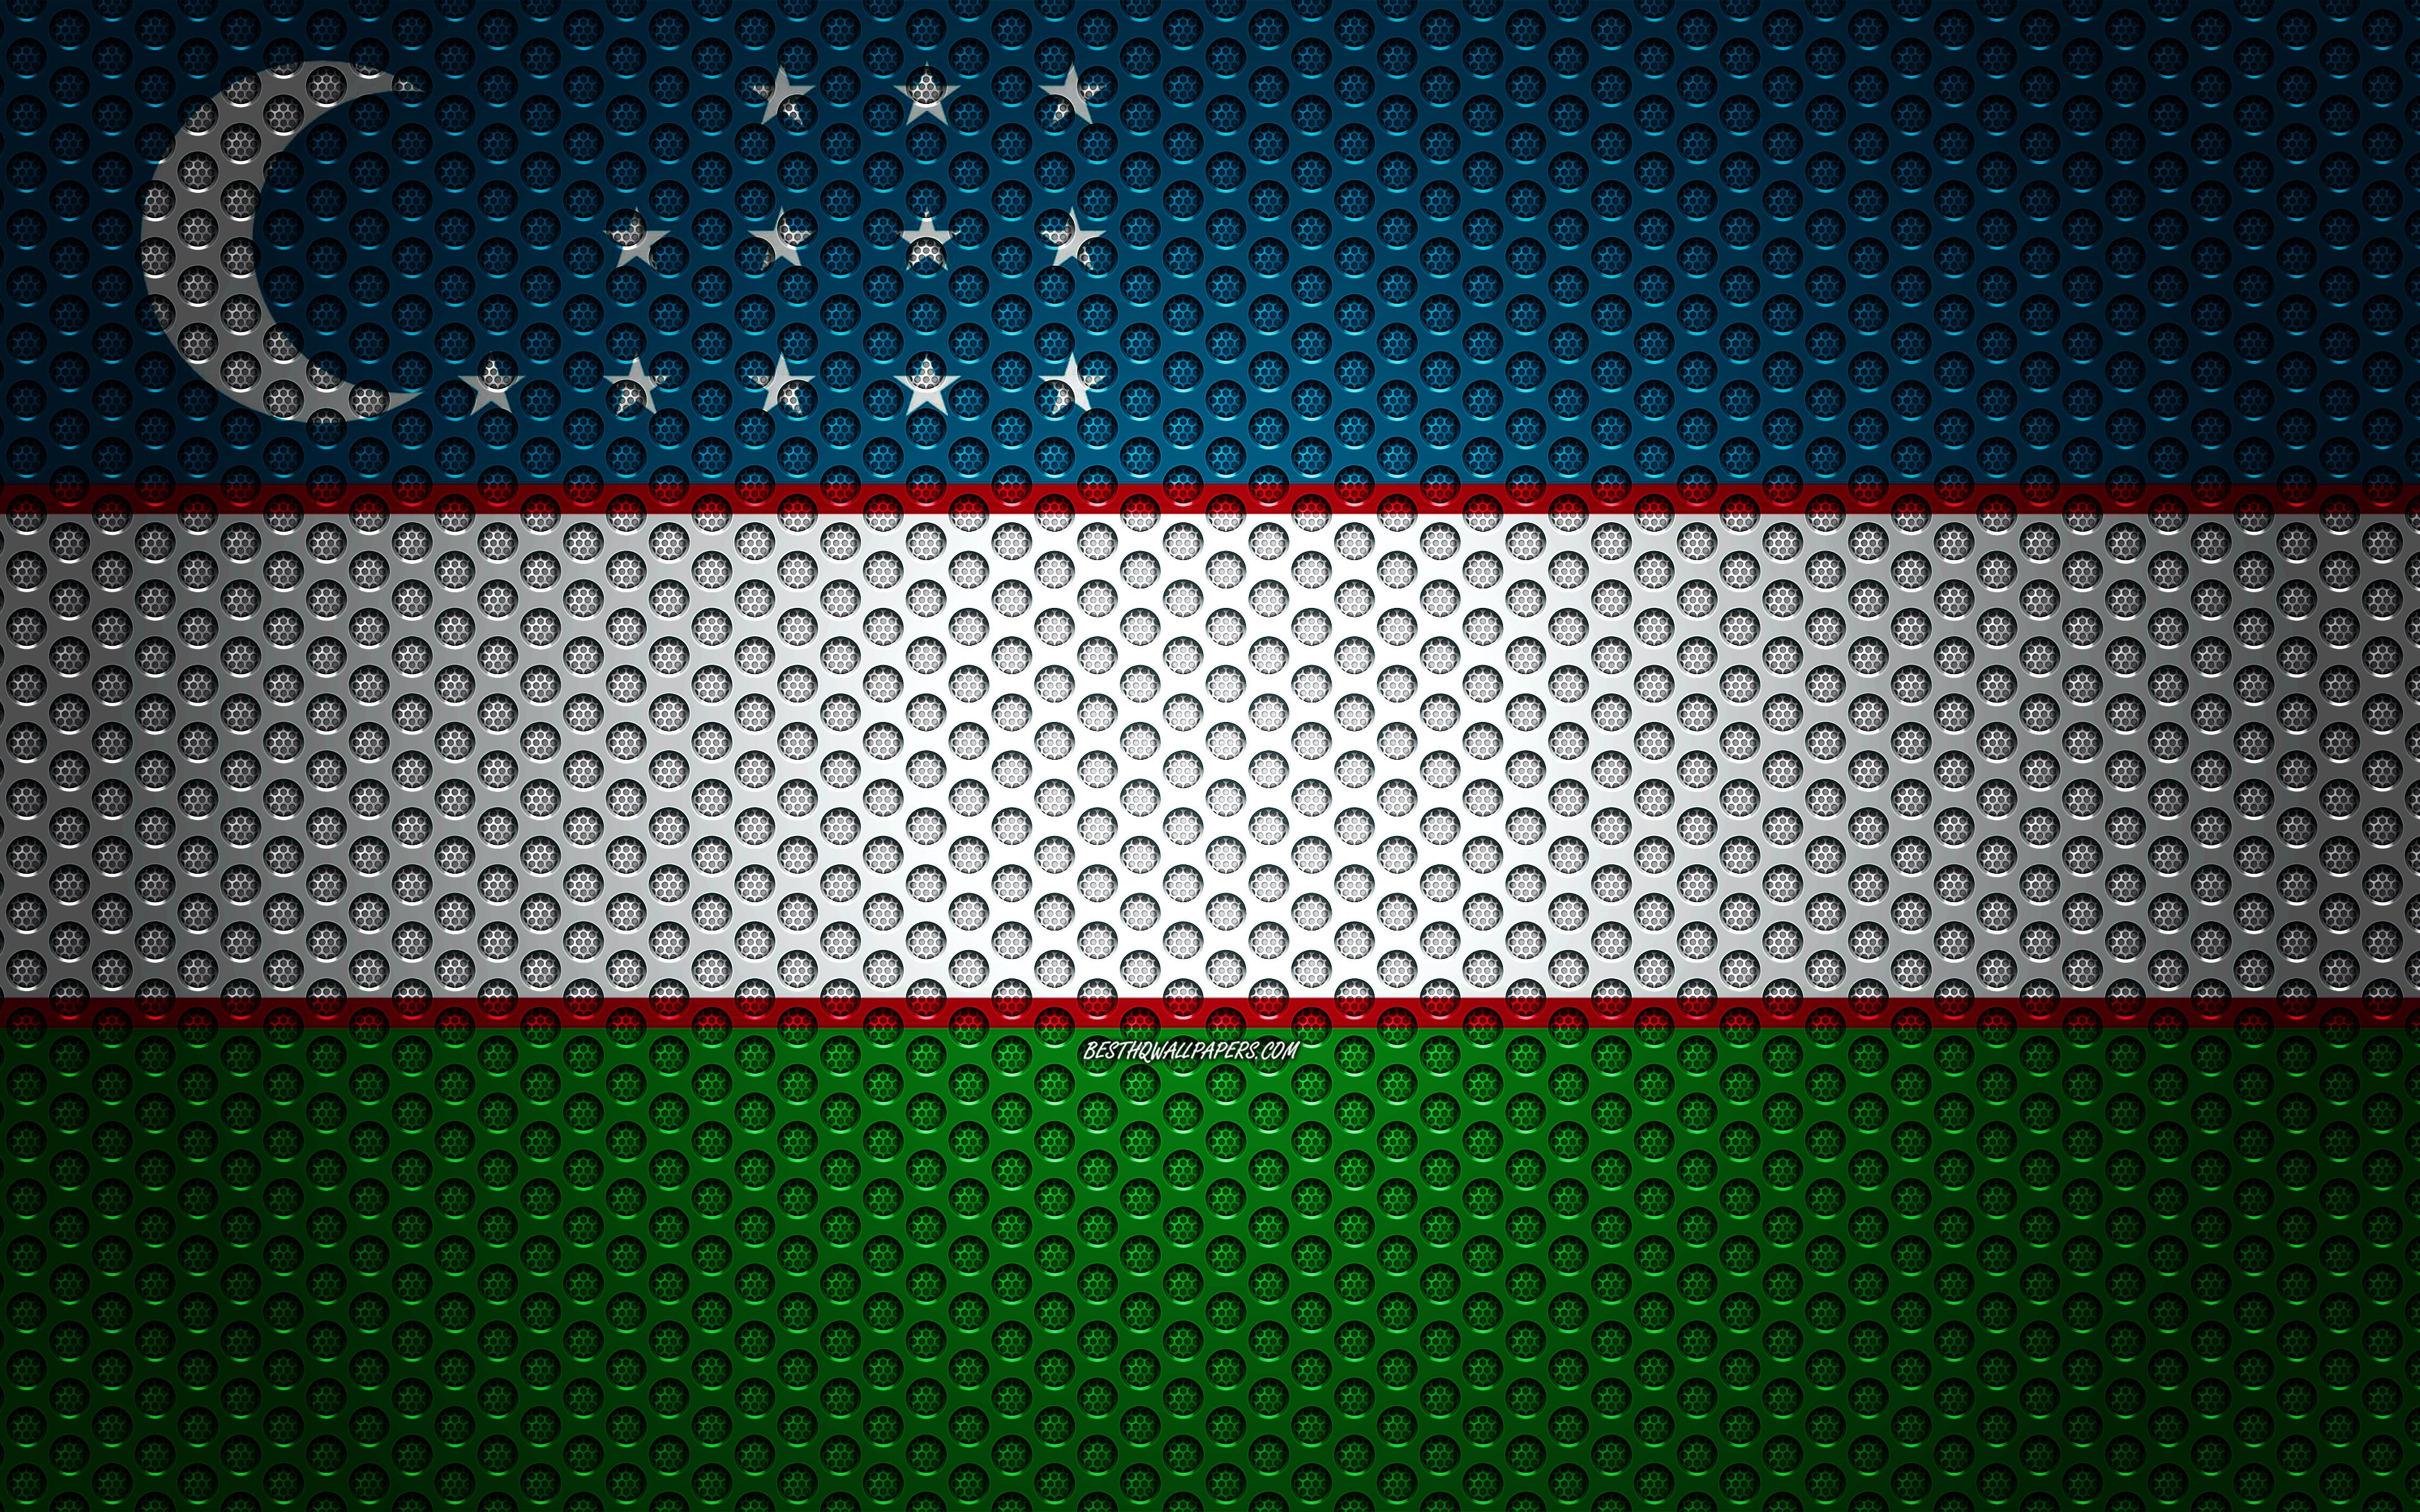 Флаг узбекистана фото гиф